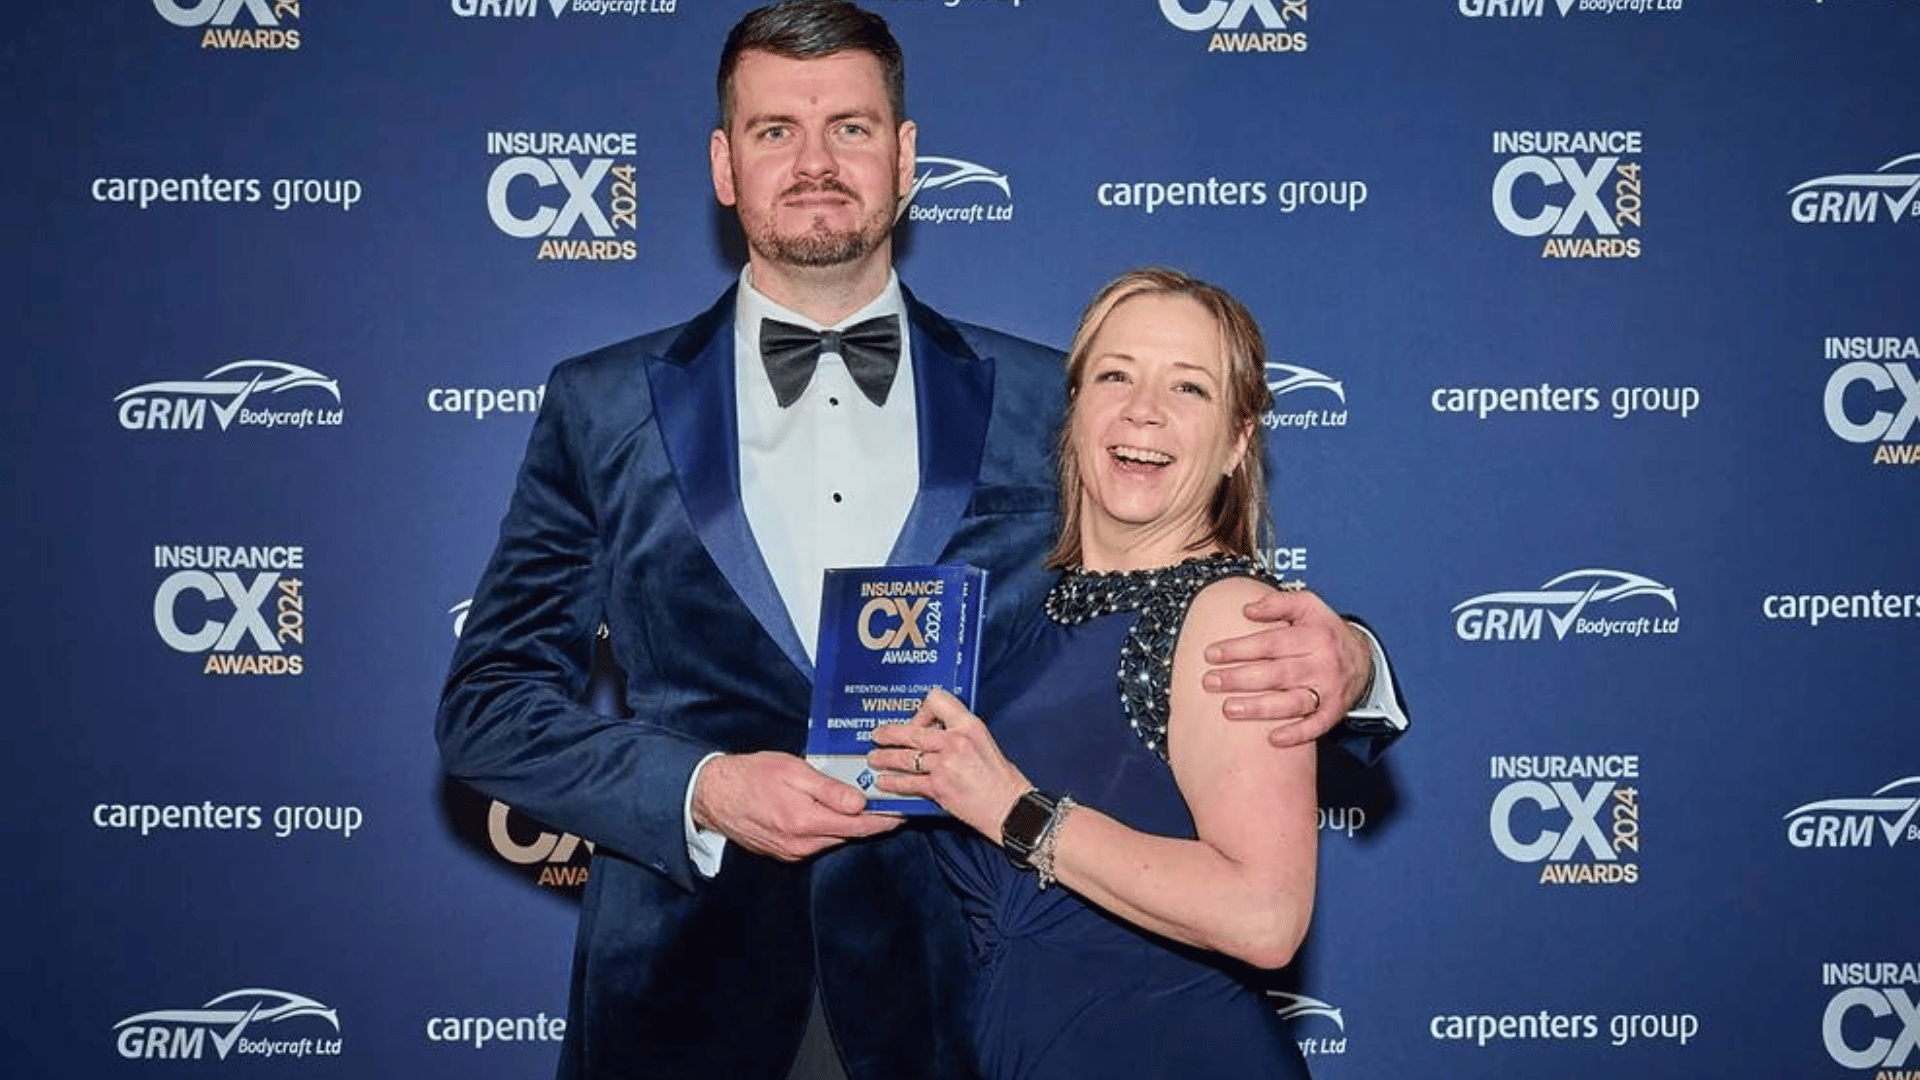 cx_awards